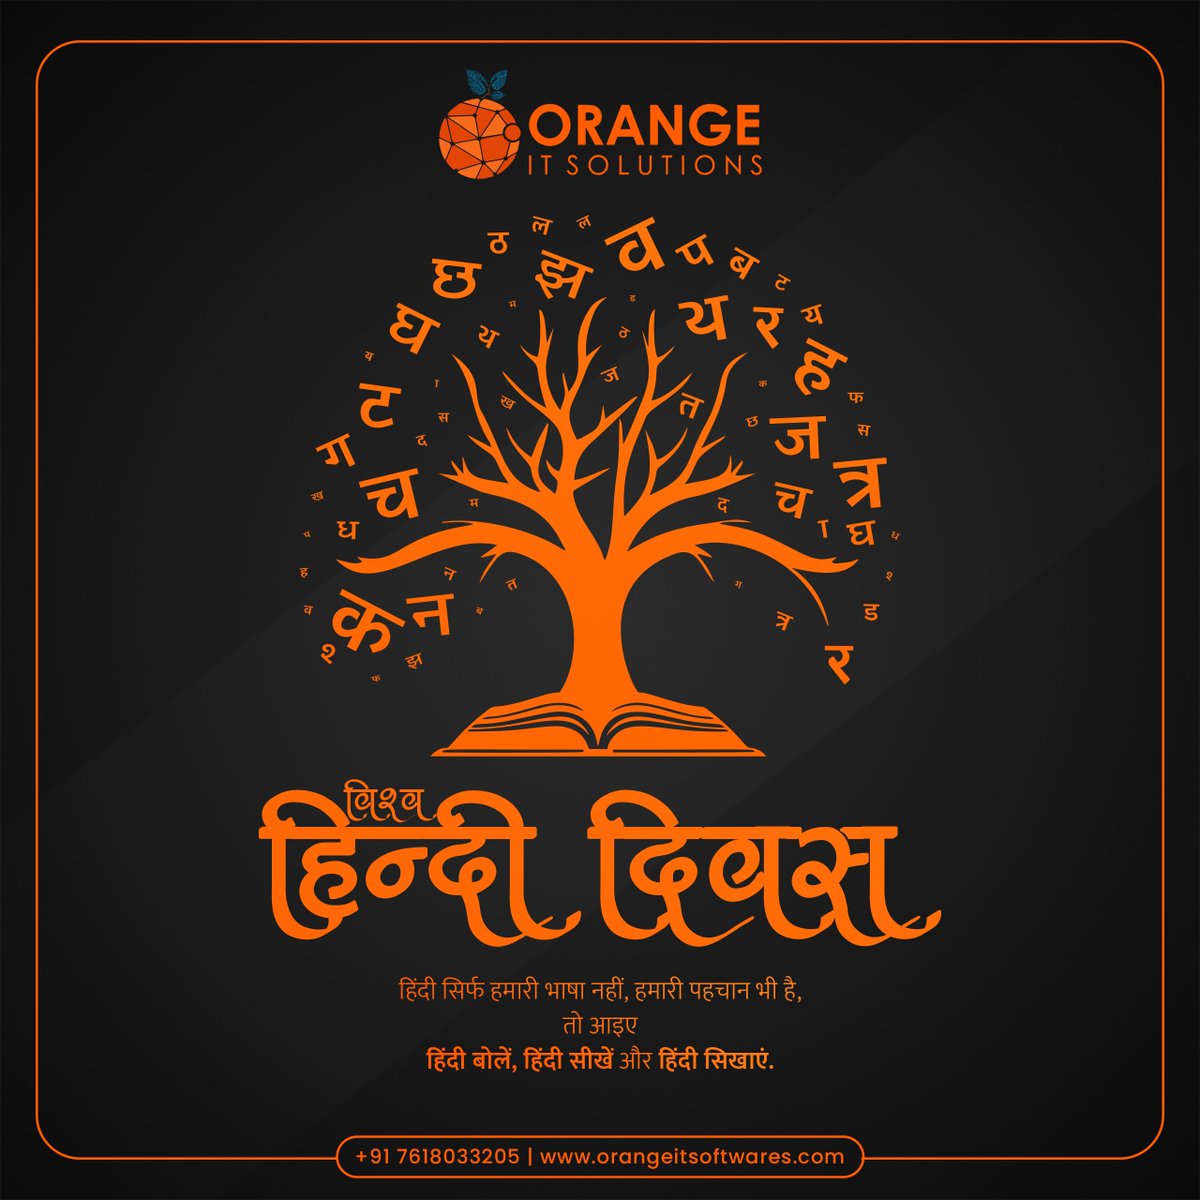 Happy Vishwa Hindi Diwas! 🇮🇳
#VishwaHindiDiwas #HindiDiwas #OrangeITSolutions #Lucknow #Kanpur #Allahabad #Gorakhpur #LocalBusiness #instagrowth #socialmediaservicesforbusiness #DigitalMarketing #Branding #LetsCelebrate